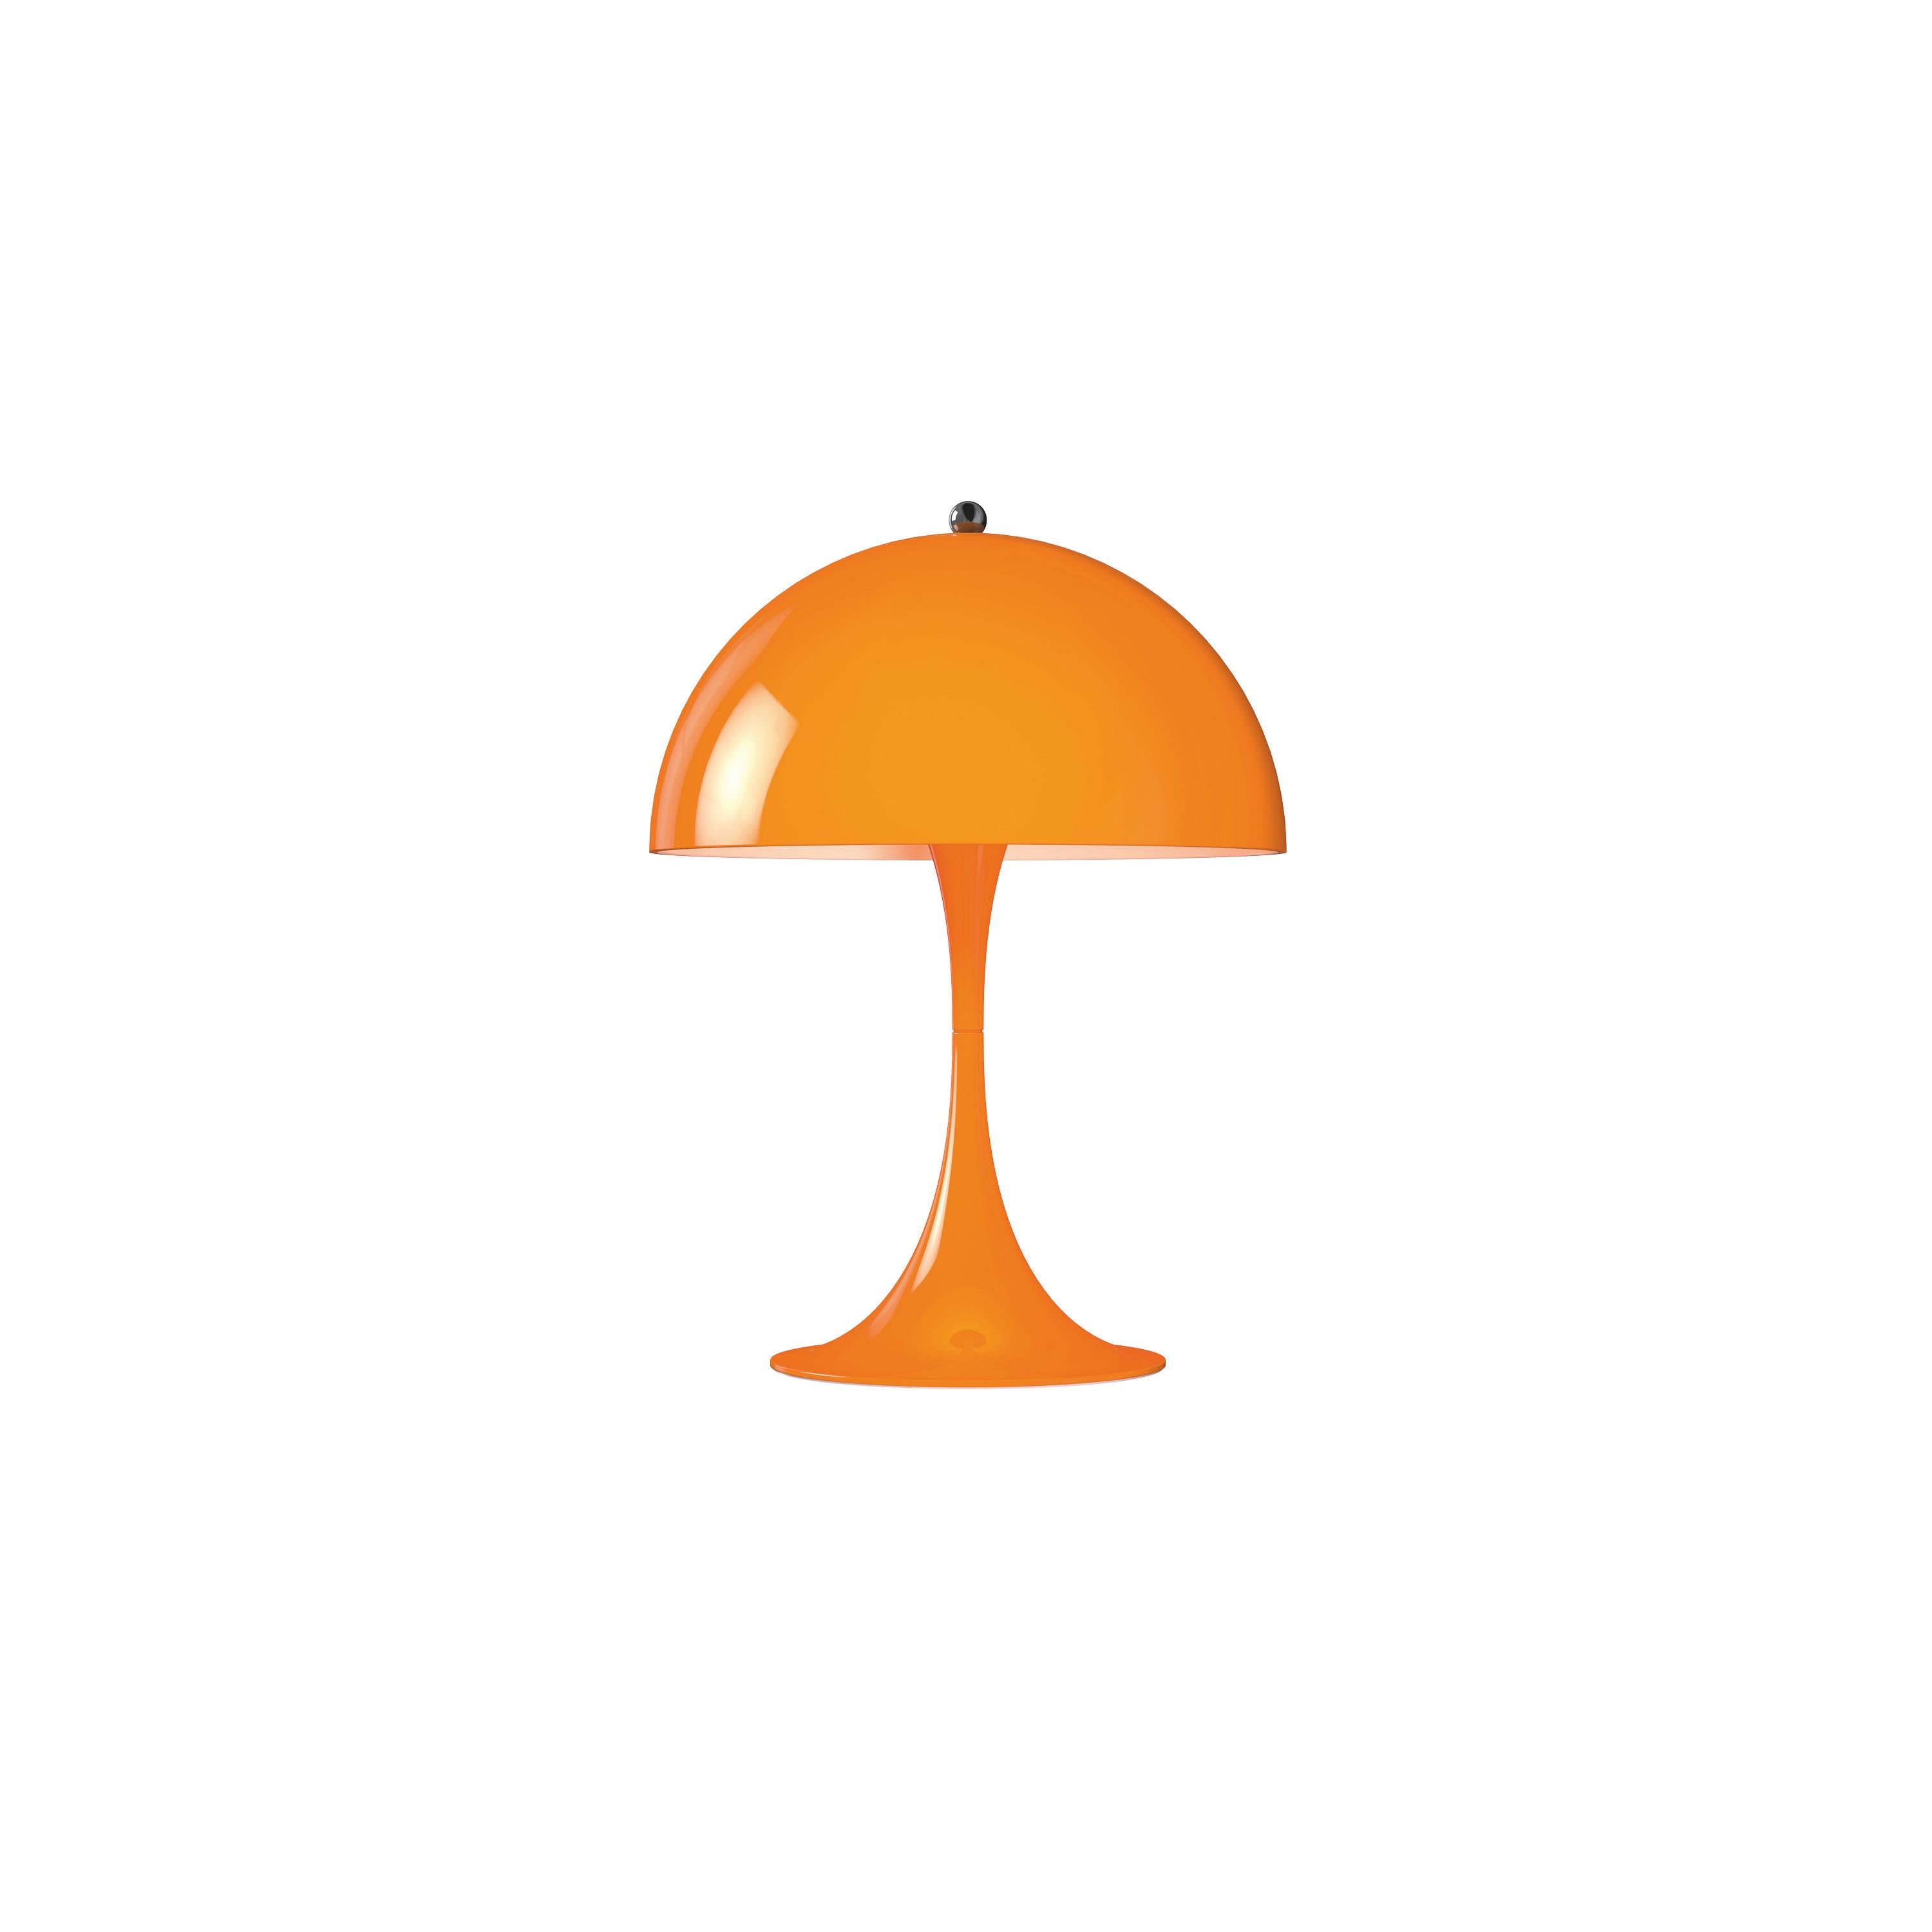 Im Angebot: Louis Poulsen Panthella 250, Tischlampe von Verner Panton, Orange (orange.jpg)